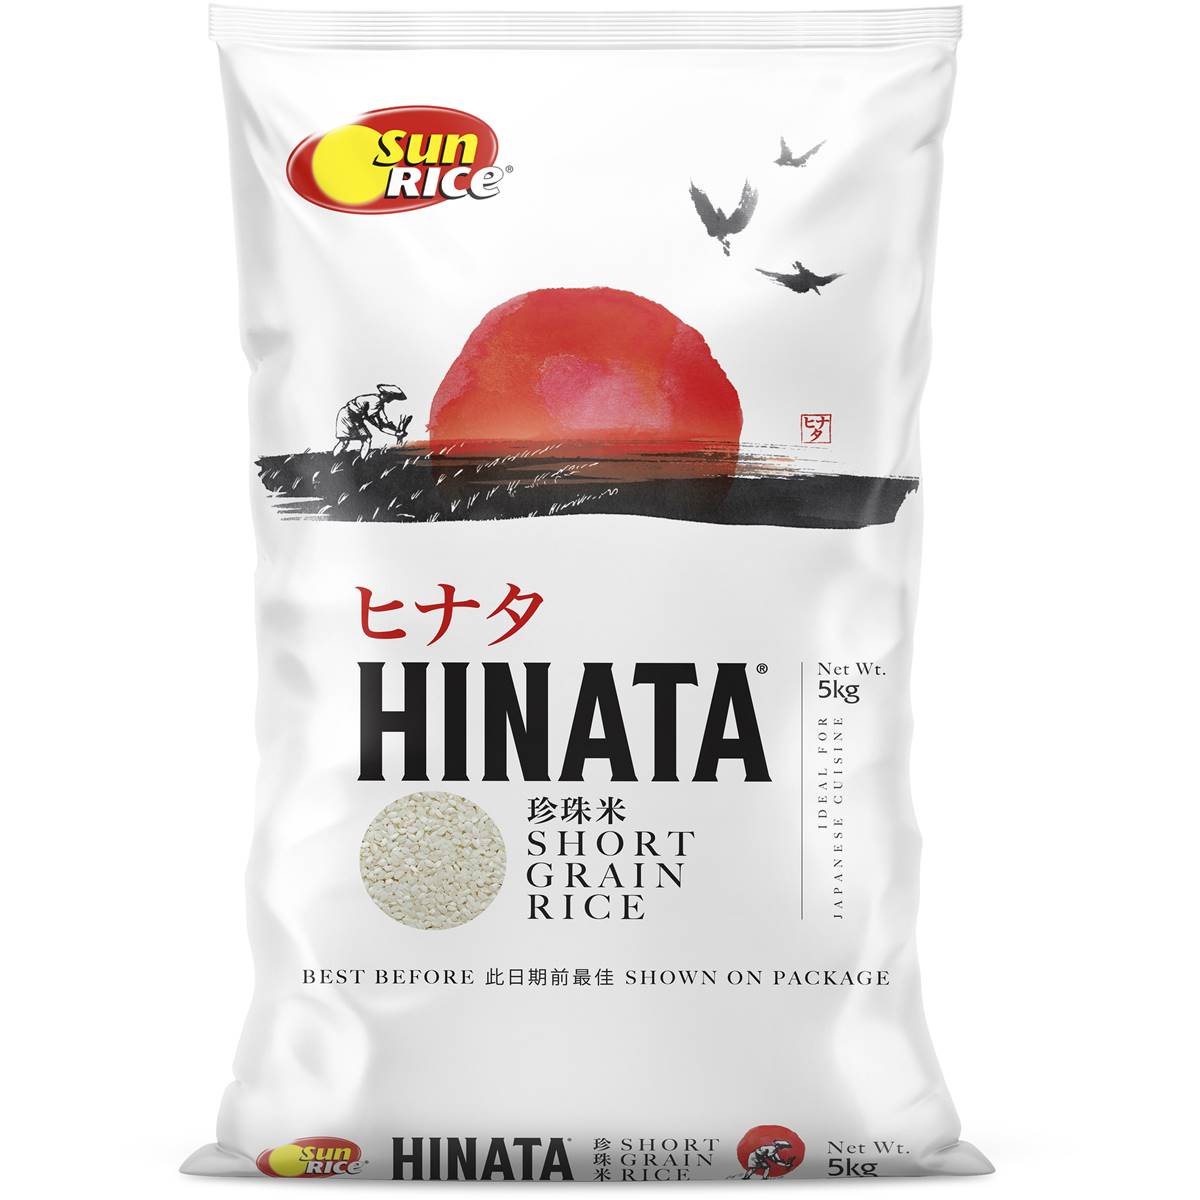 Calories in Sunrice Hinata Short Grain Rice